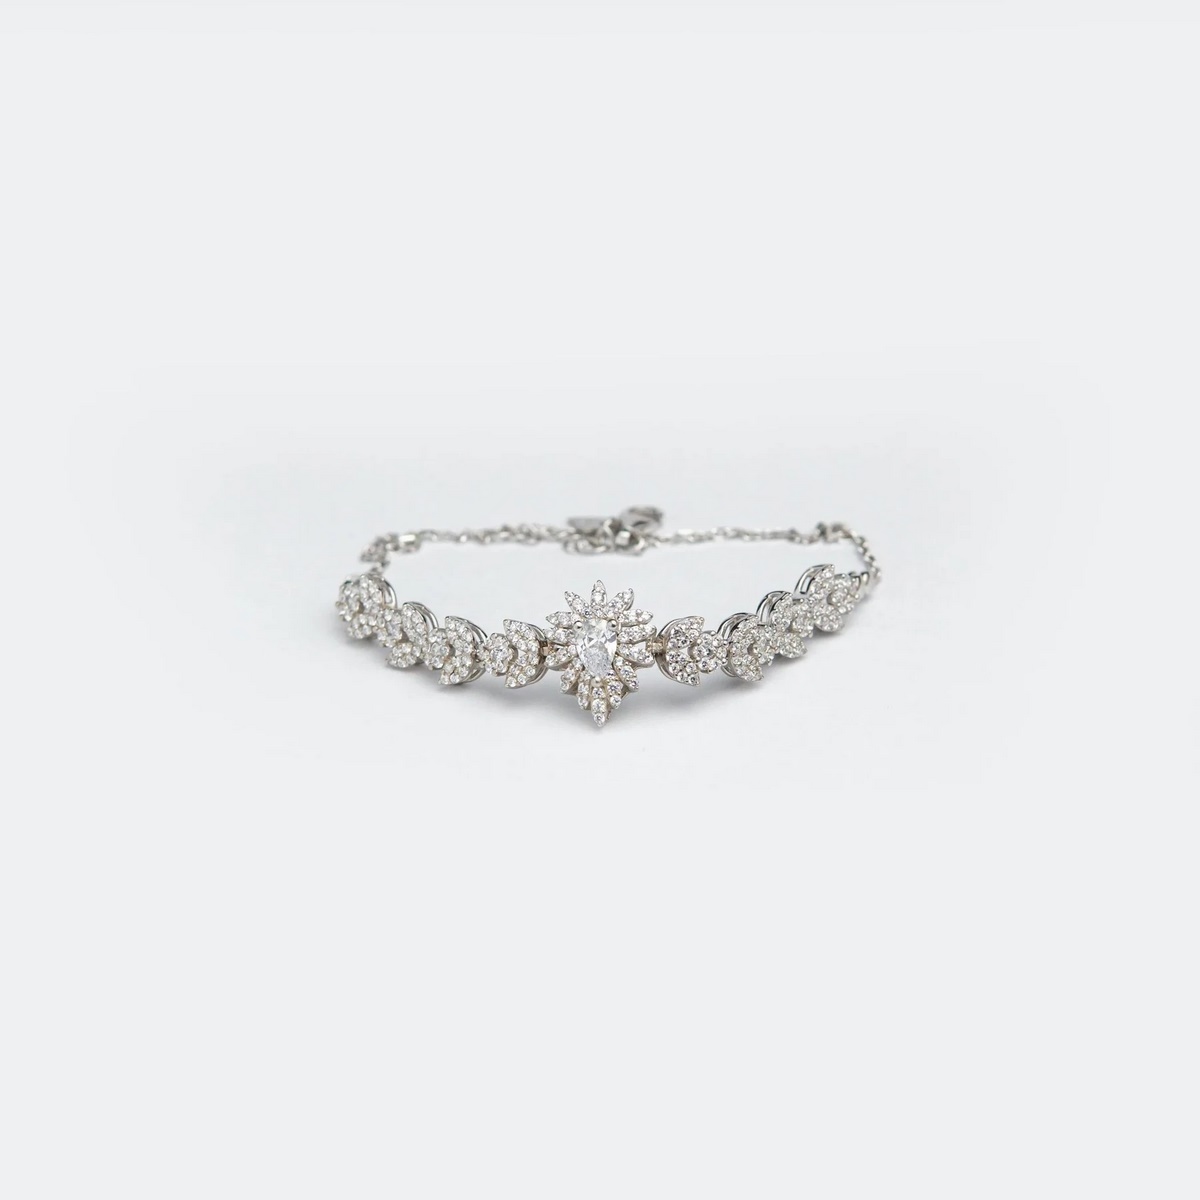 MINIMAL STYLE BRACELET YKL Jewellers Bracelet Collection